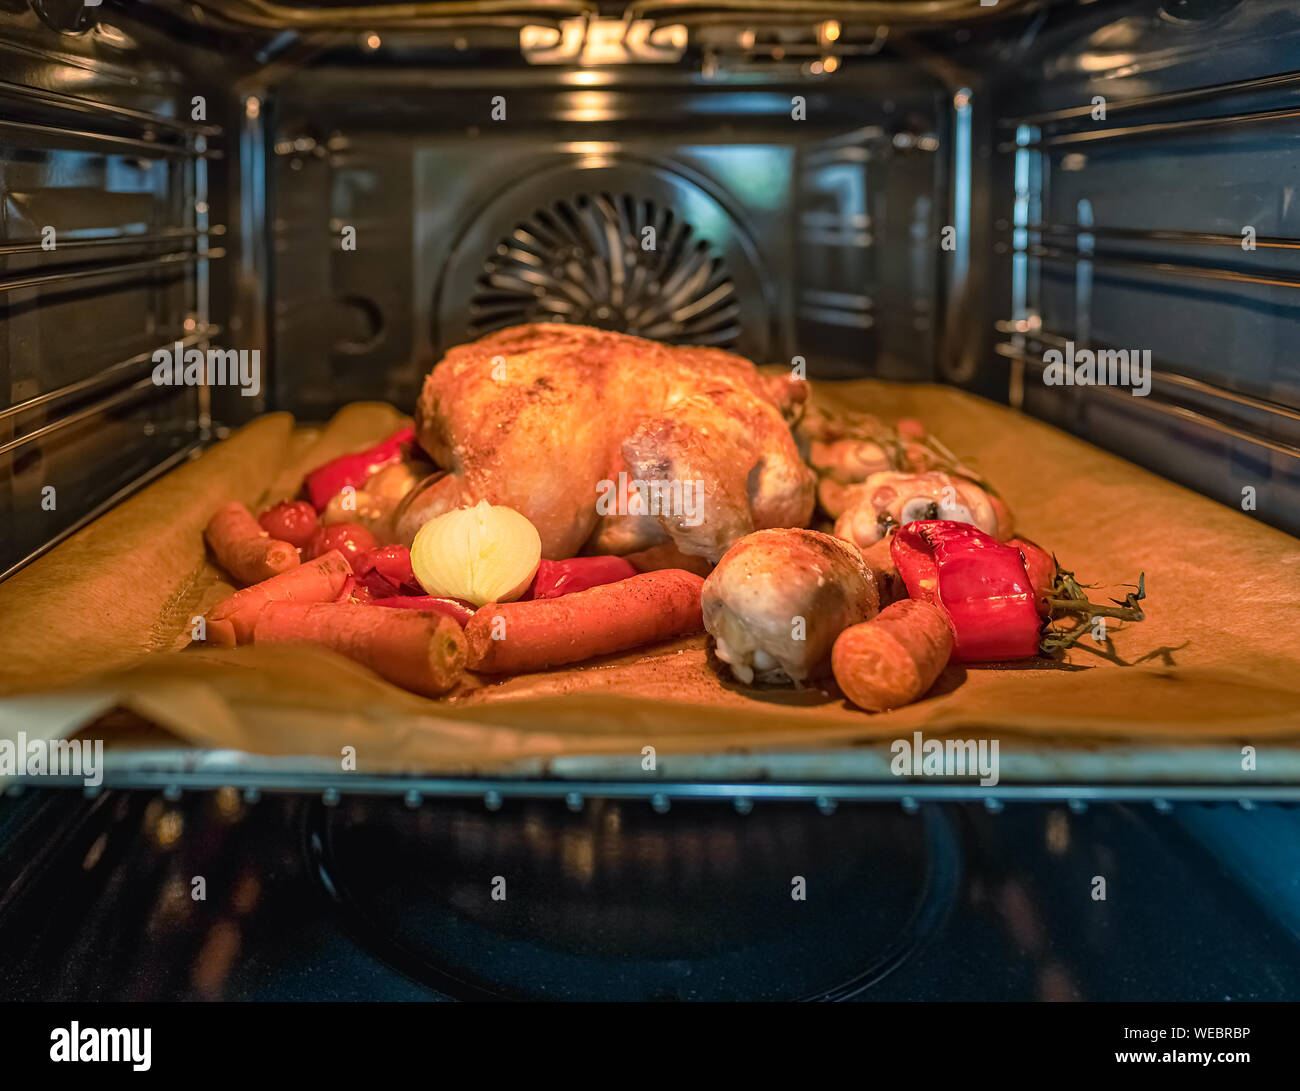 https://c8.alamy.com/comp/WEBRBP/appetizing-roast-turkey-with-vegetables-in-the-oven-WEBRBP.jpg